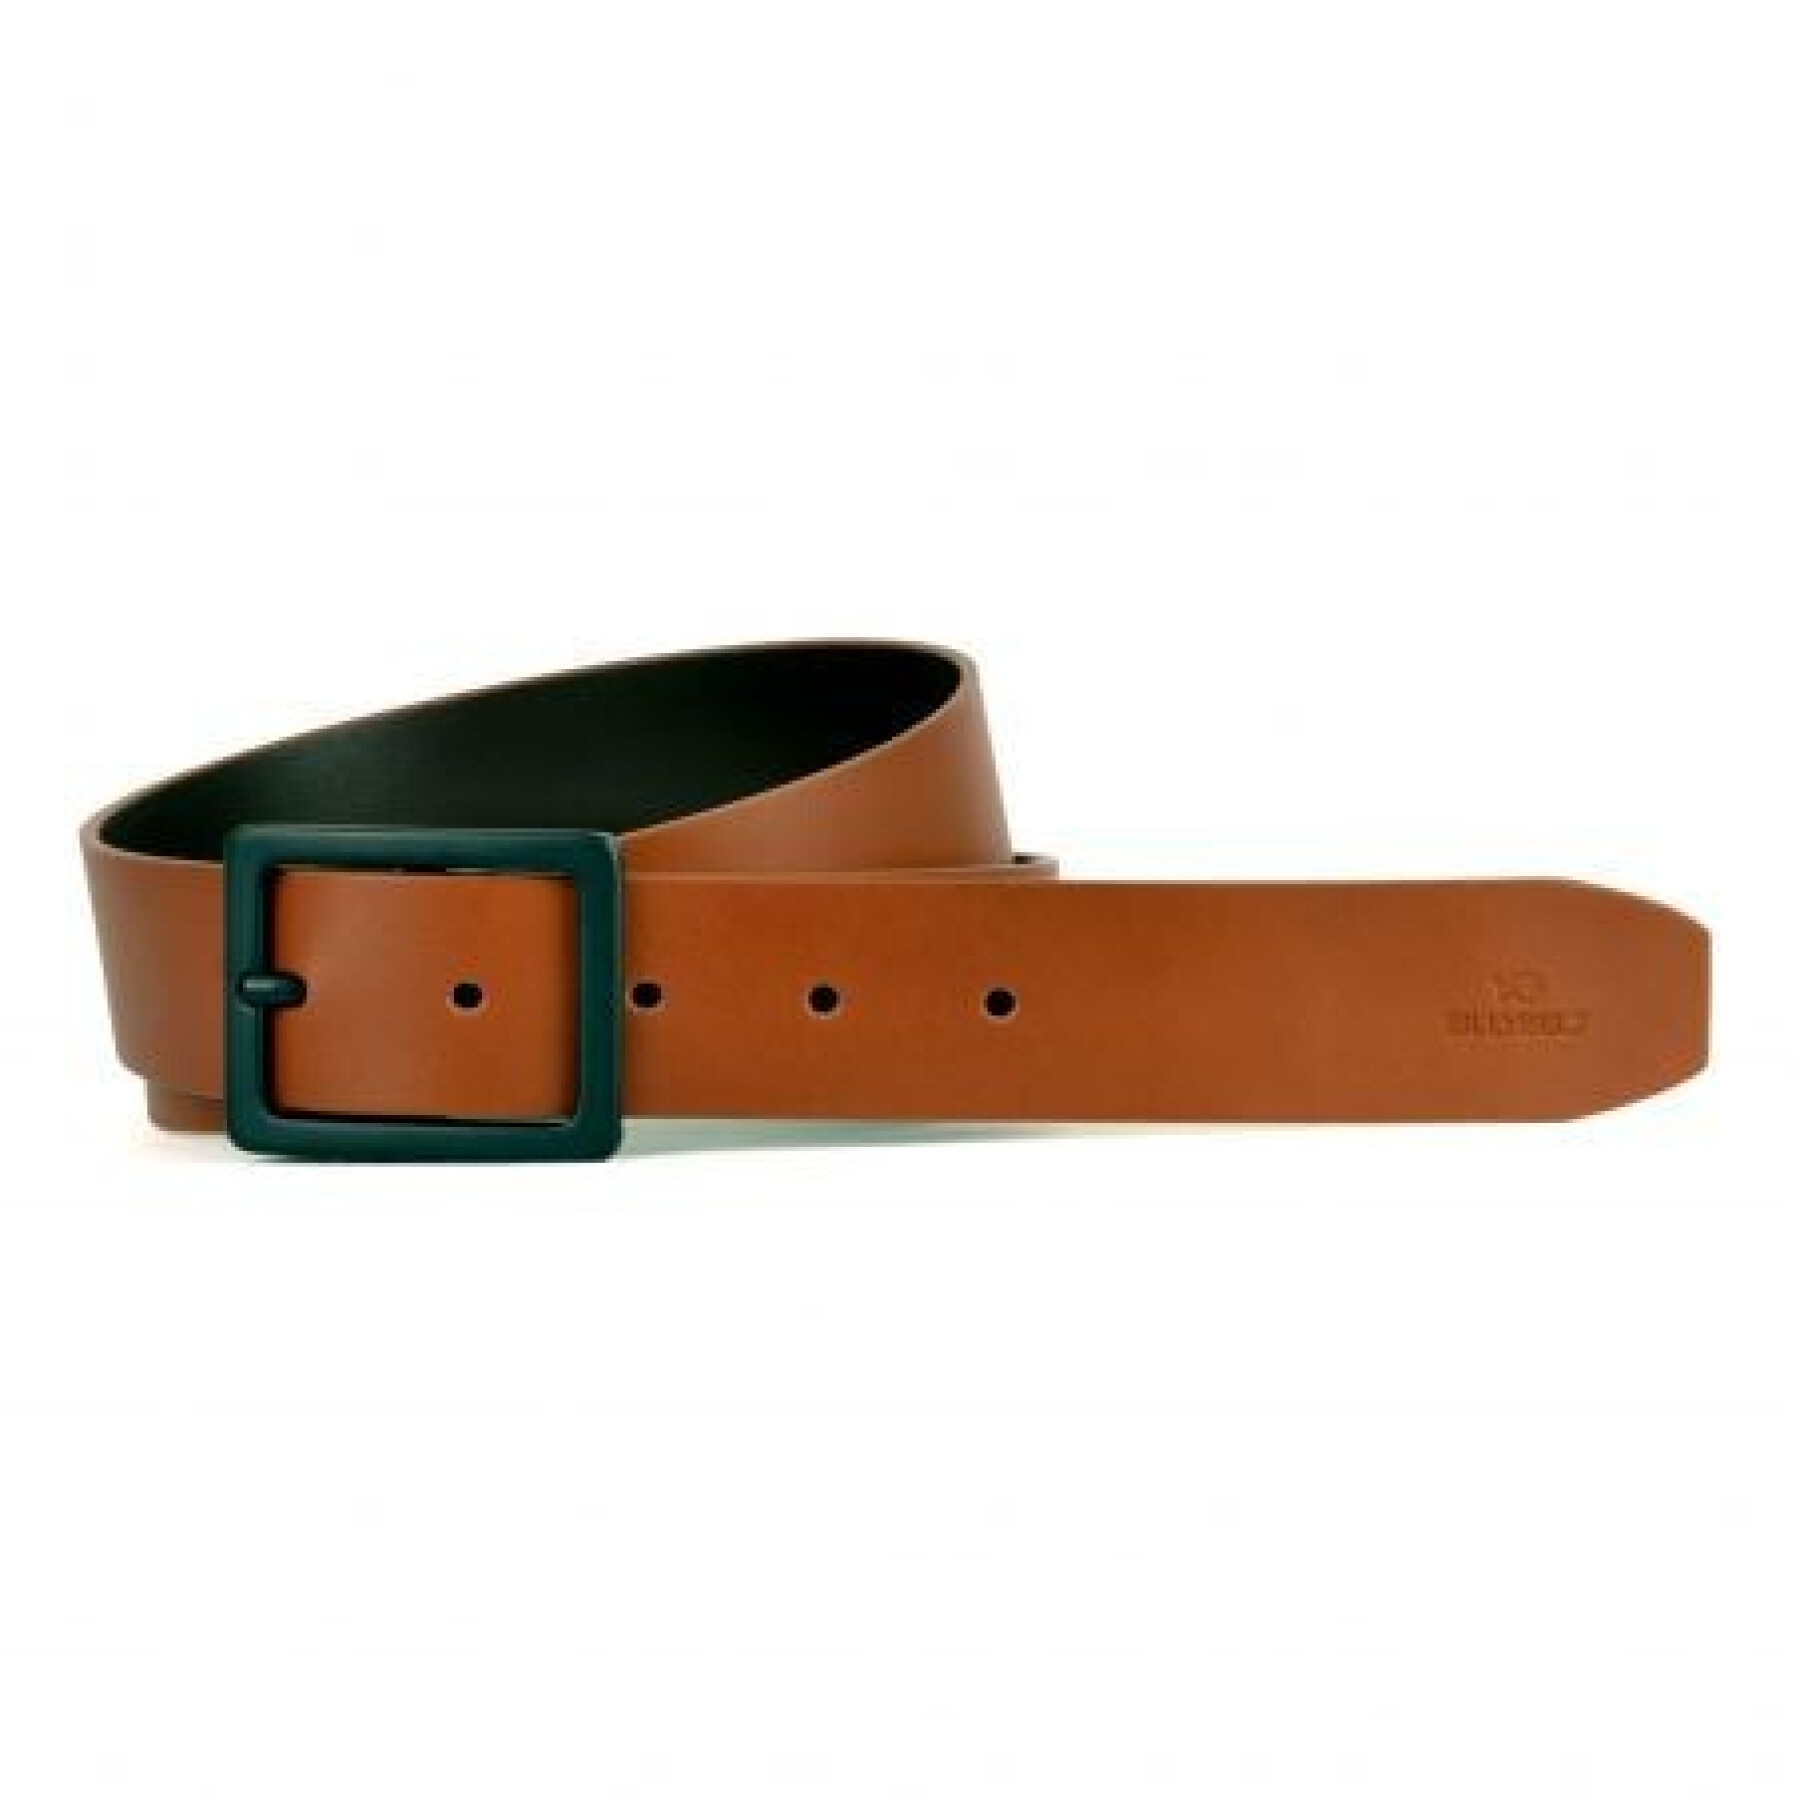 Italian leather belt Billybelt